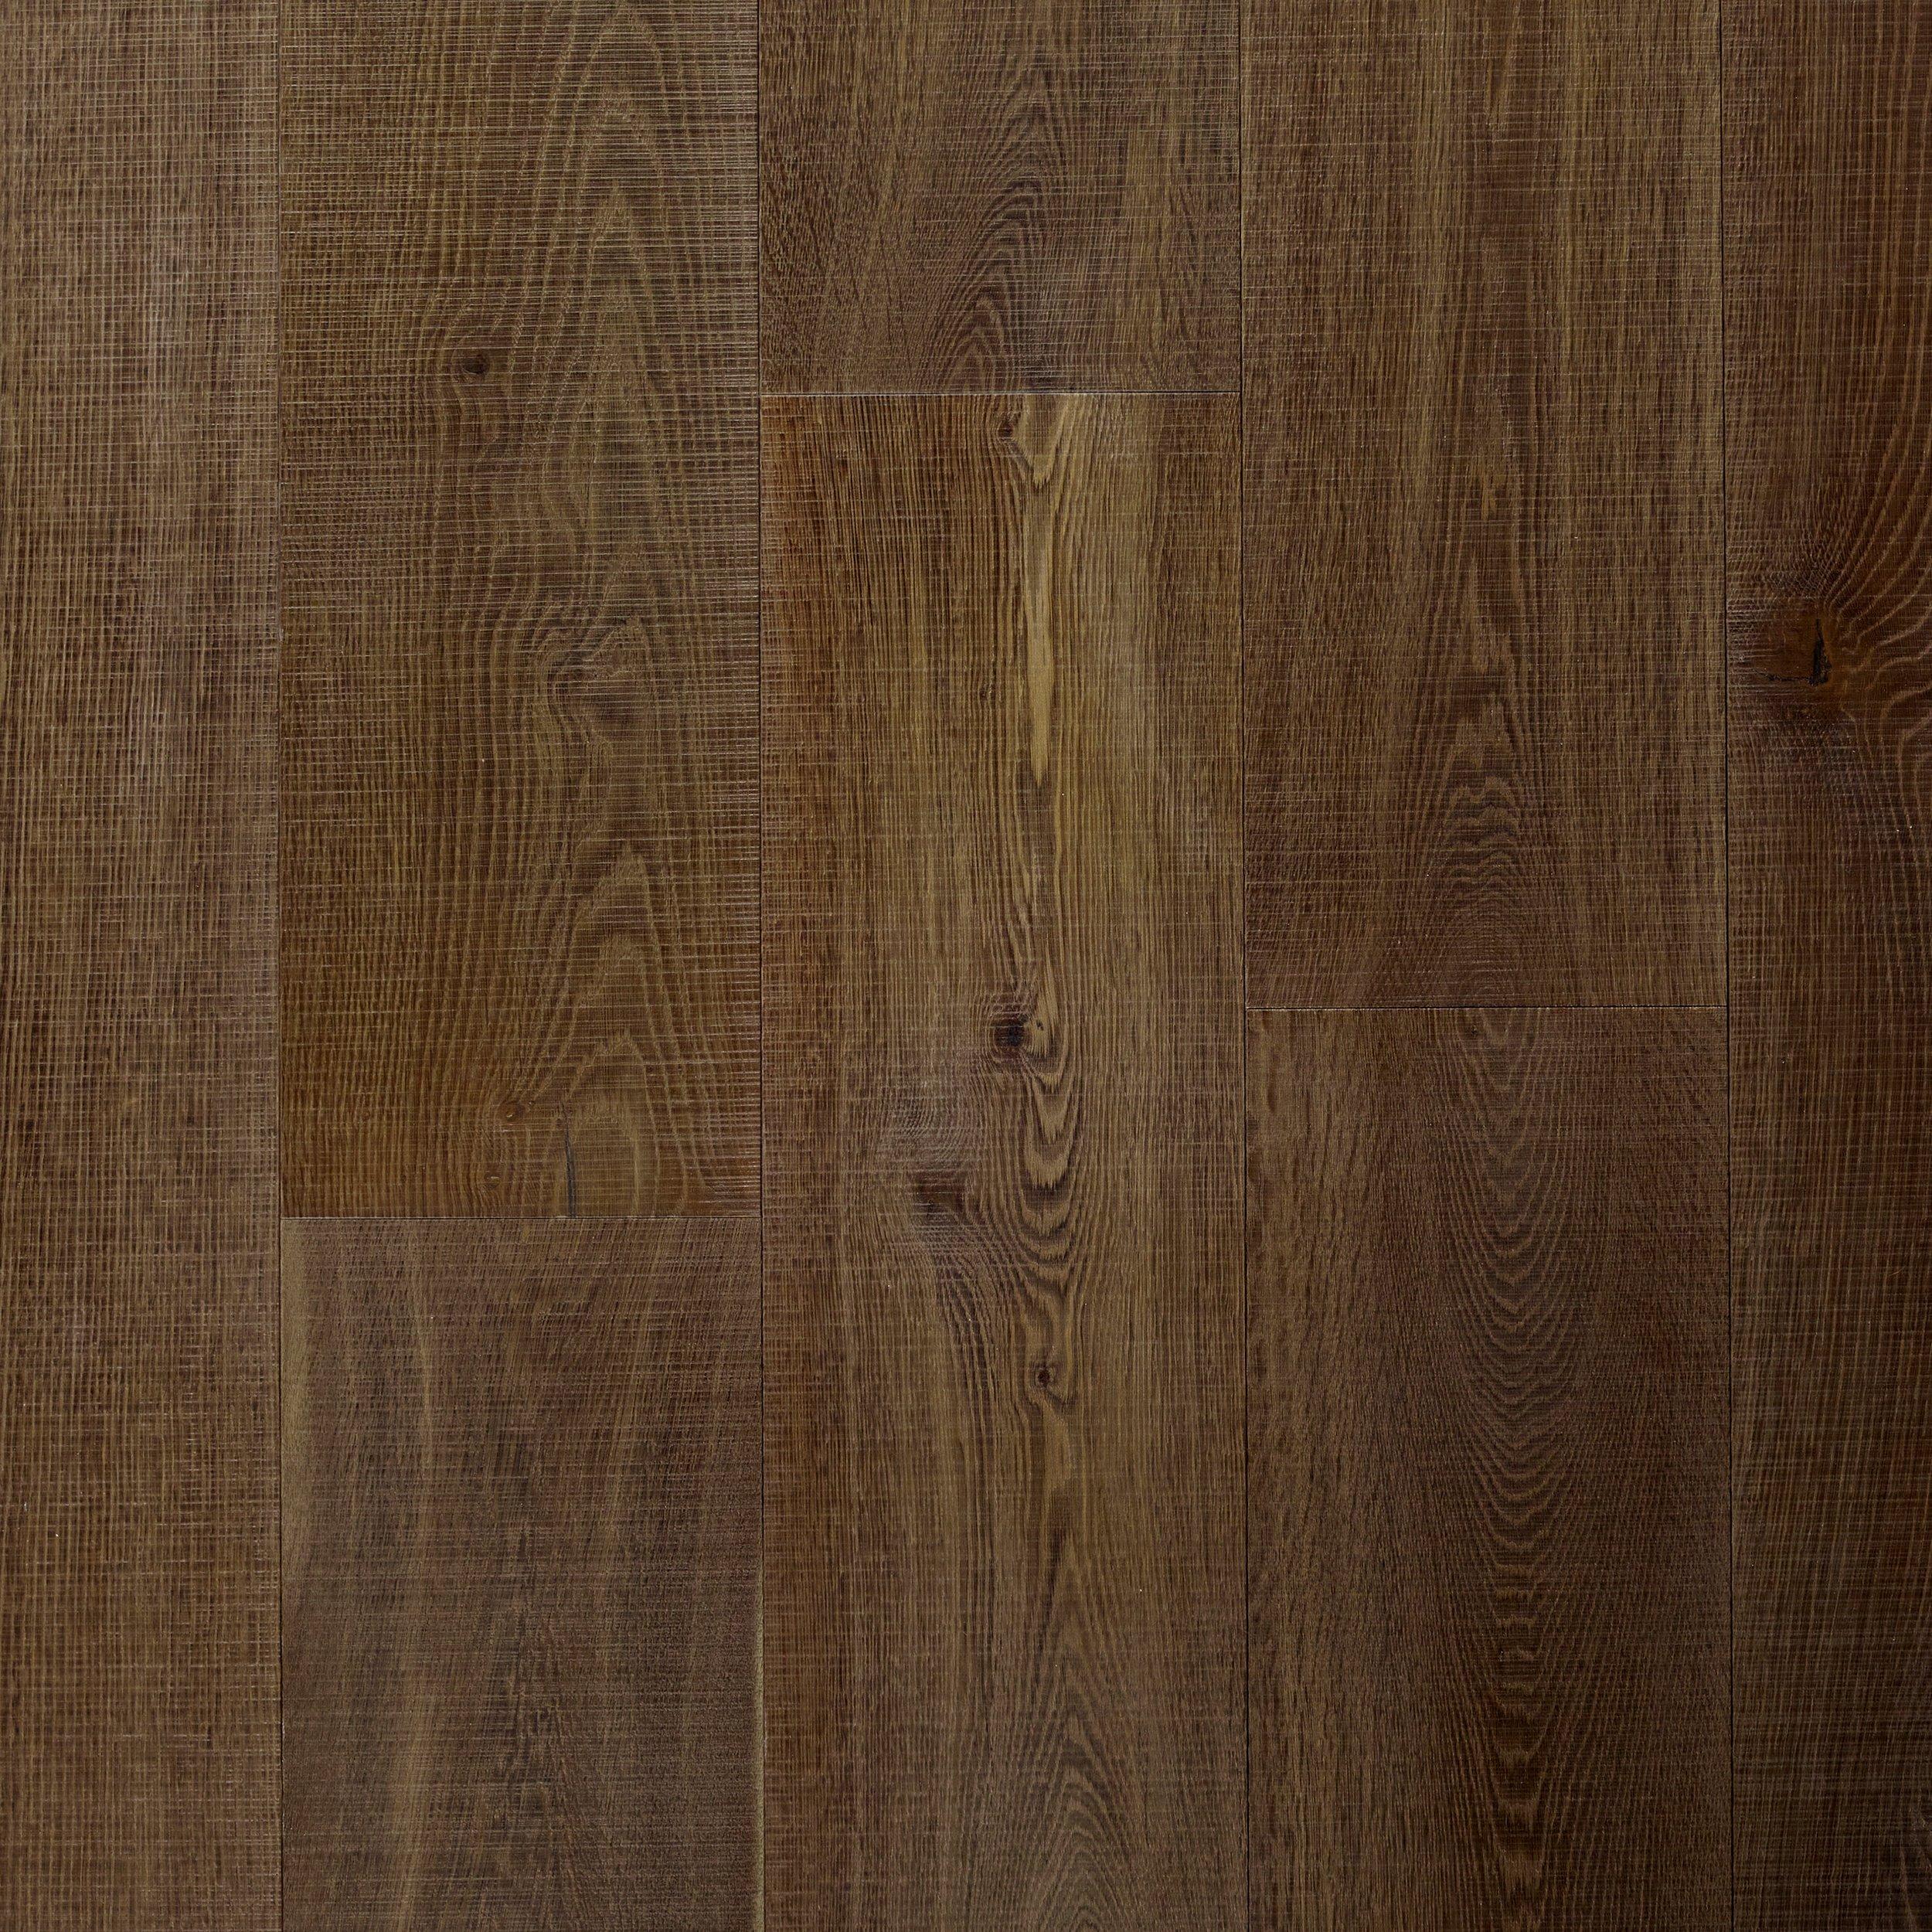 Moreland White Oak Distressed Engineered Hardwood